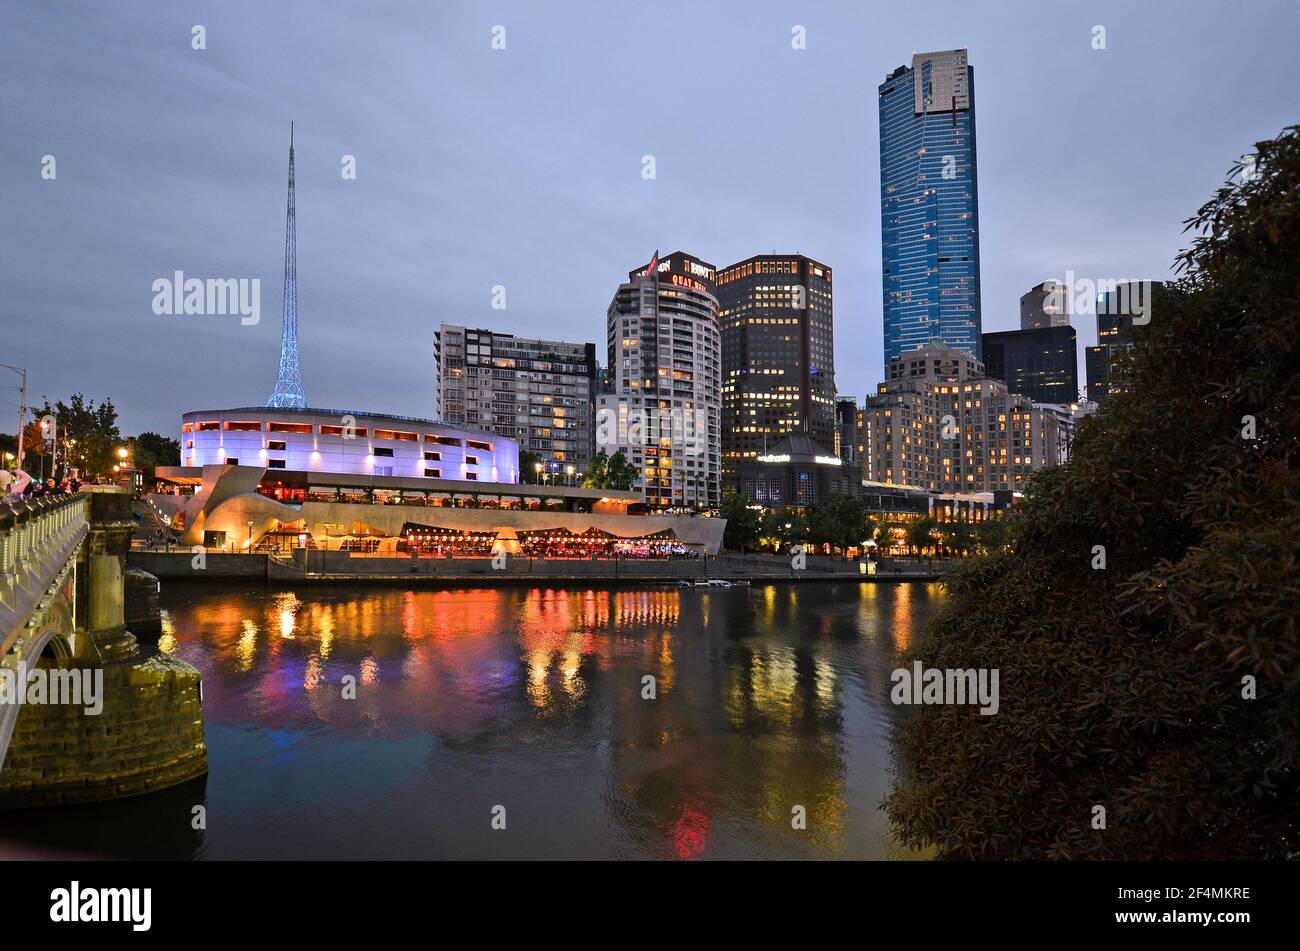 Melbourne, VIC, Australien - 05. November 2017: Nachtszene zum Southbank-Viertel mit beleuchtetem Southgate-Komplex, Kunstzentrum und Eureka-Turm Stockfoto